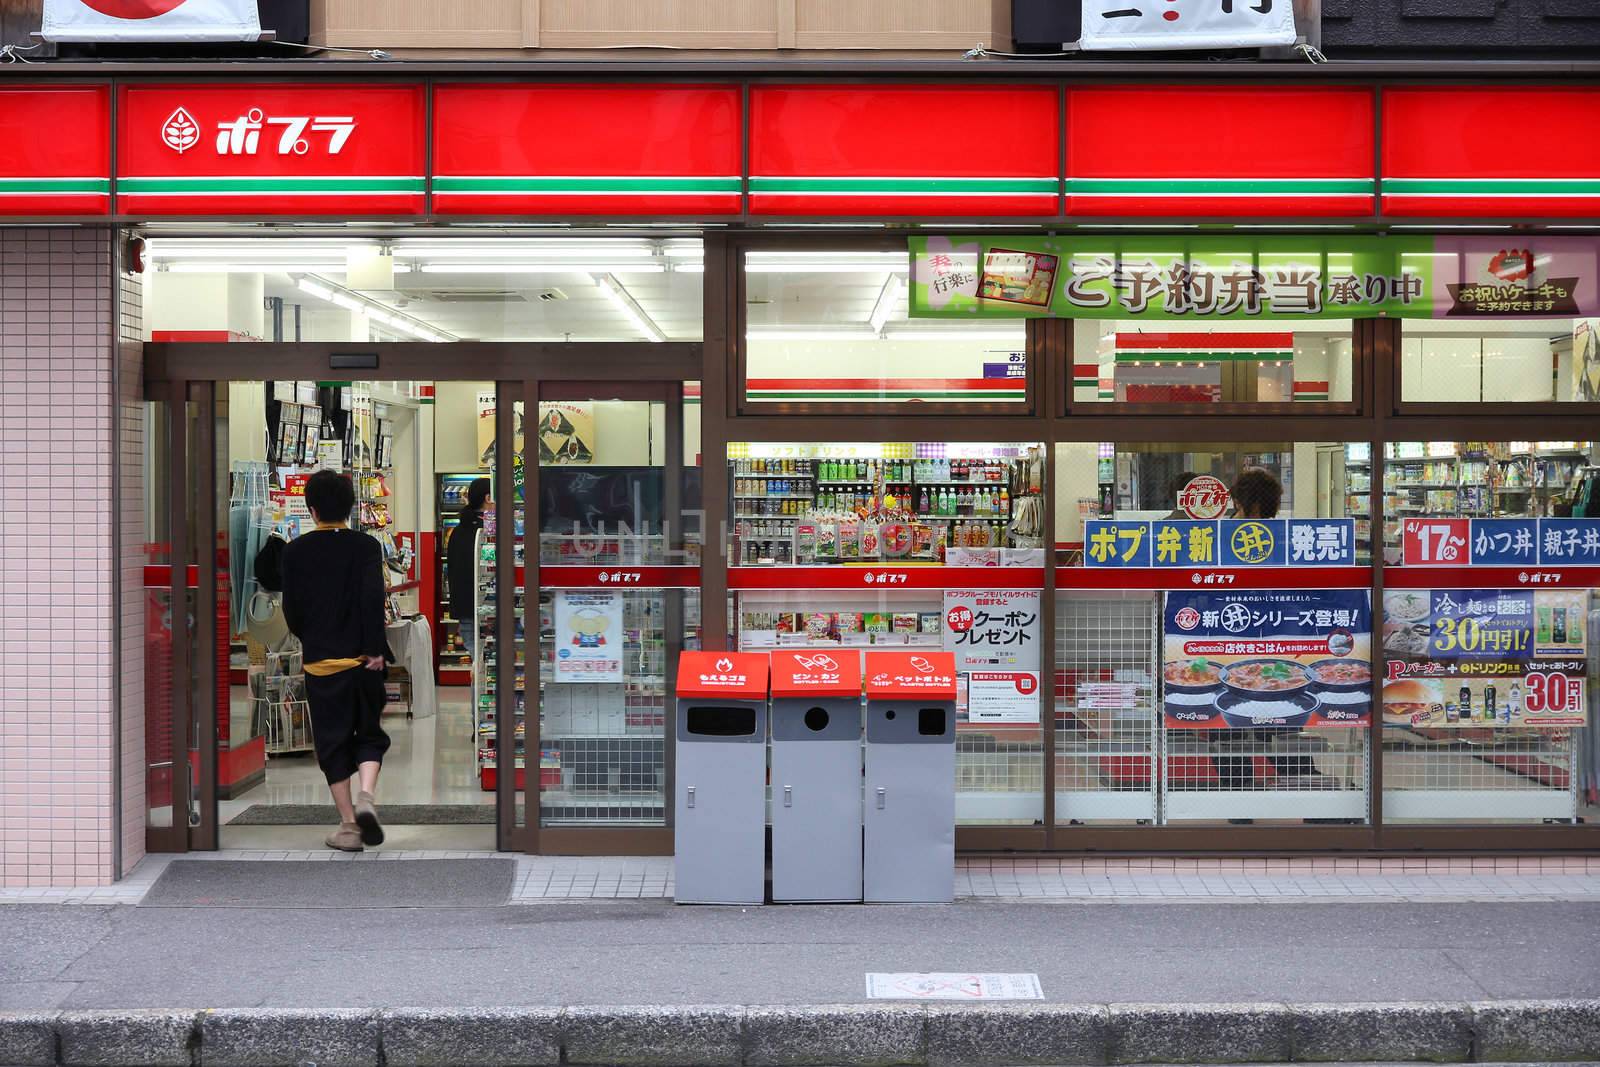 Poplar shop, Hiroshima by tupungato